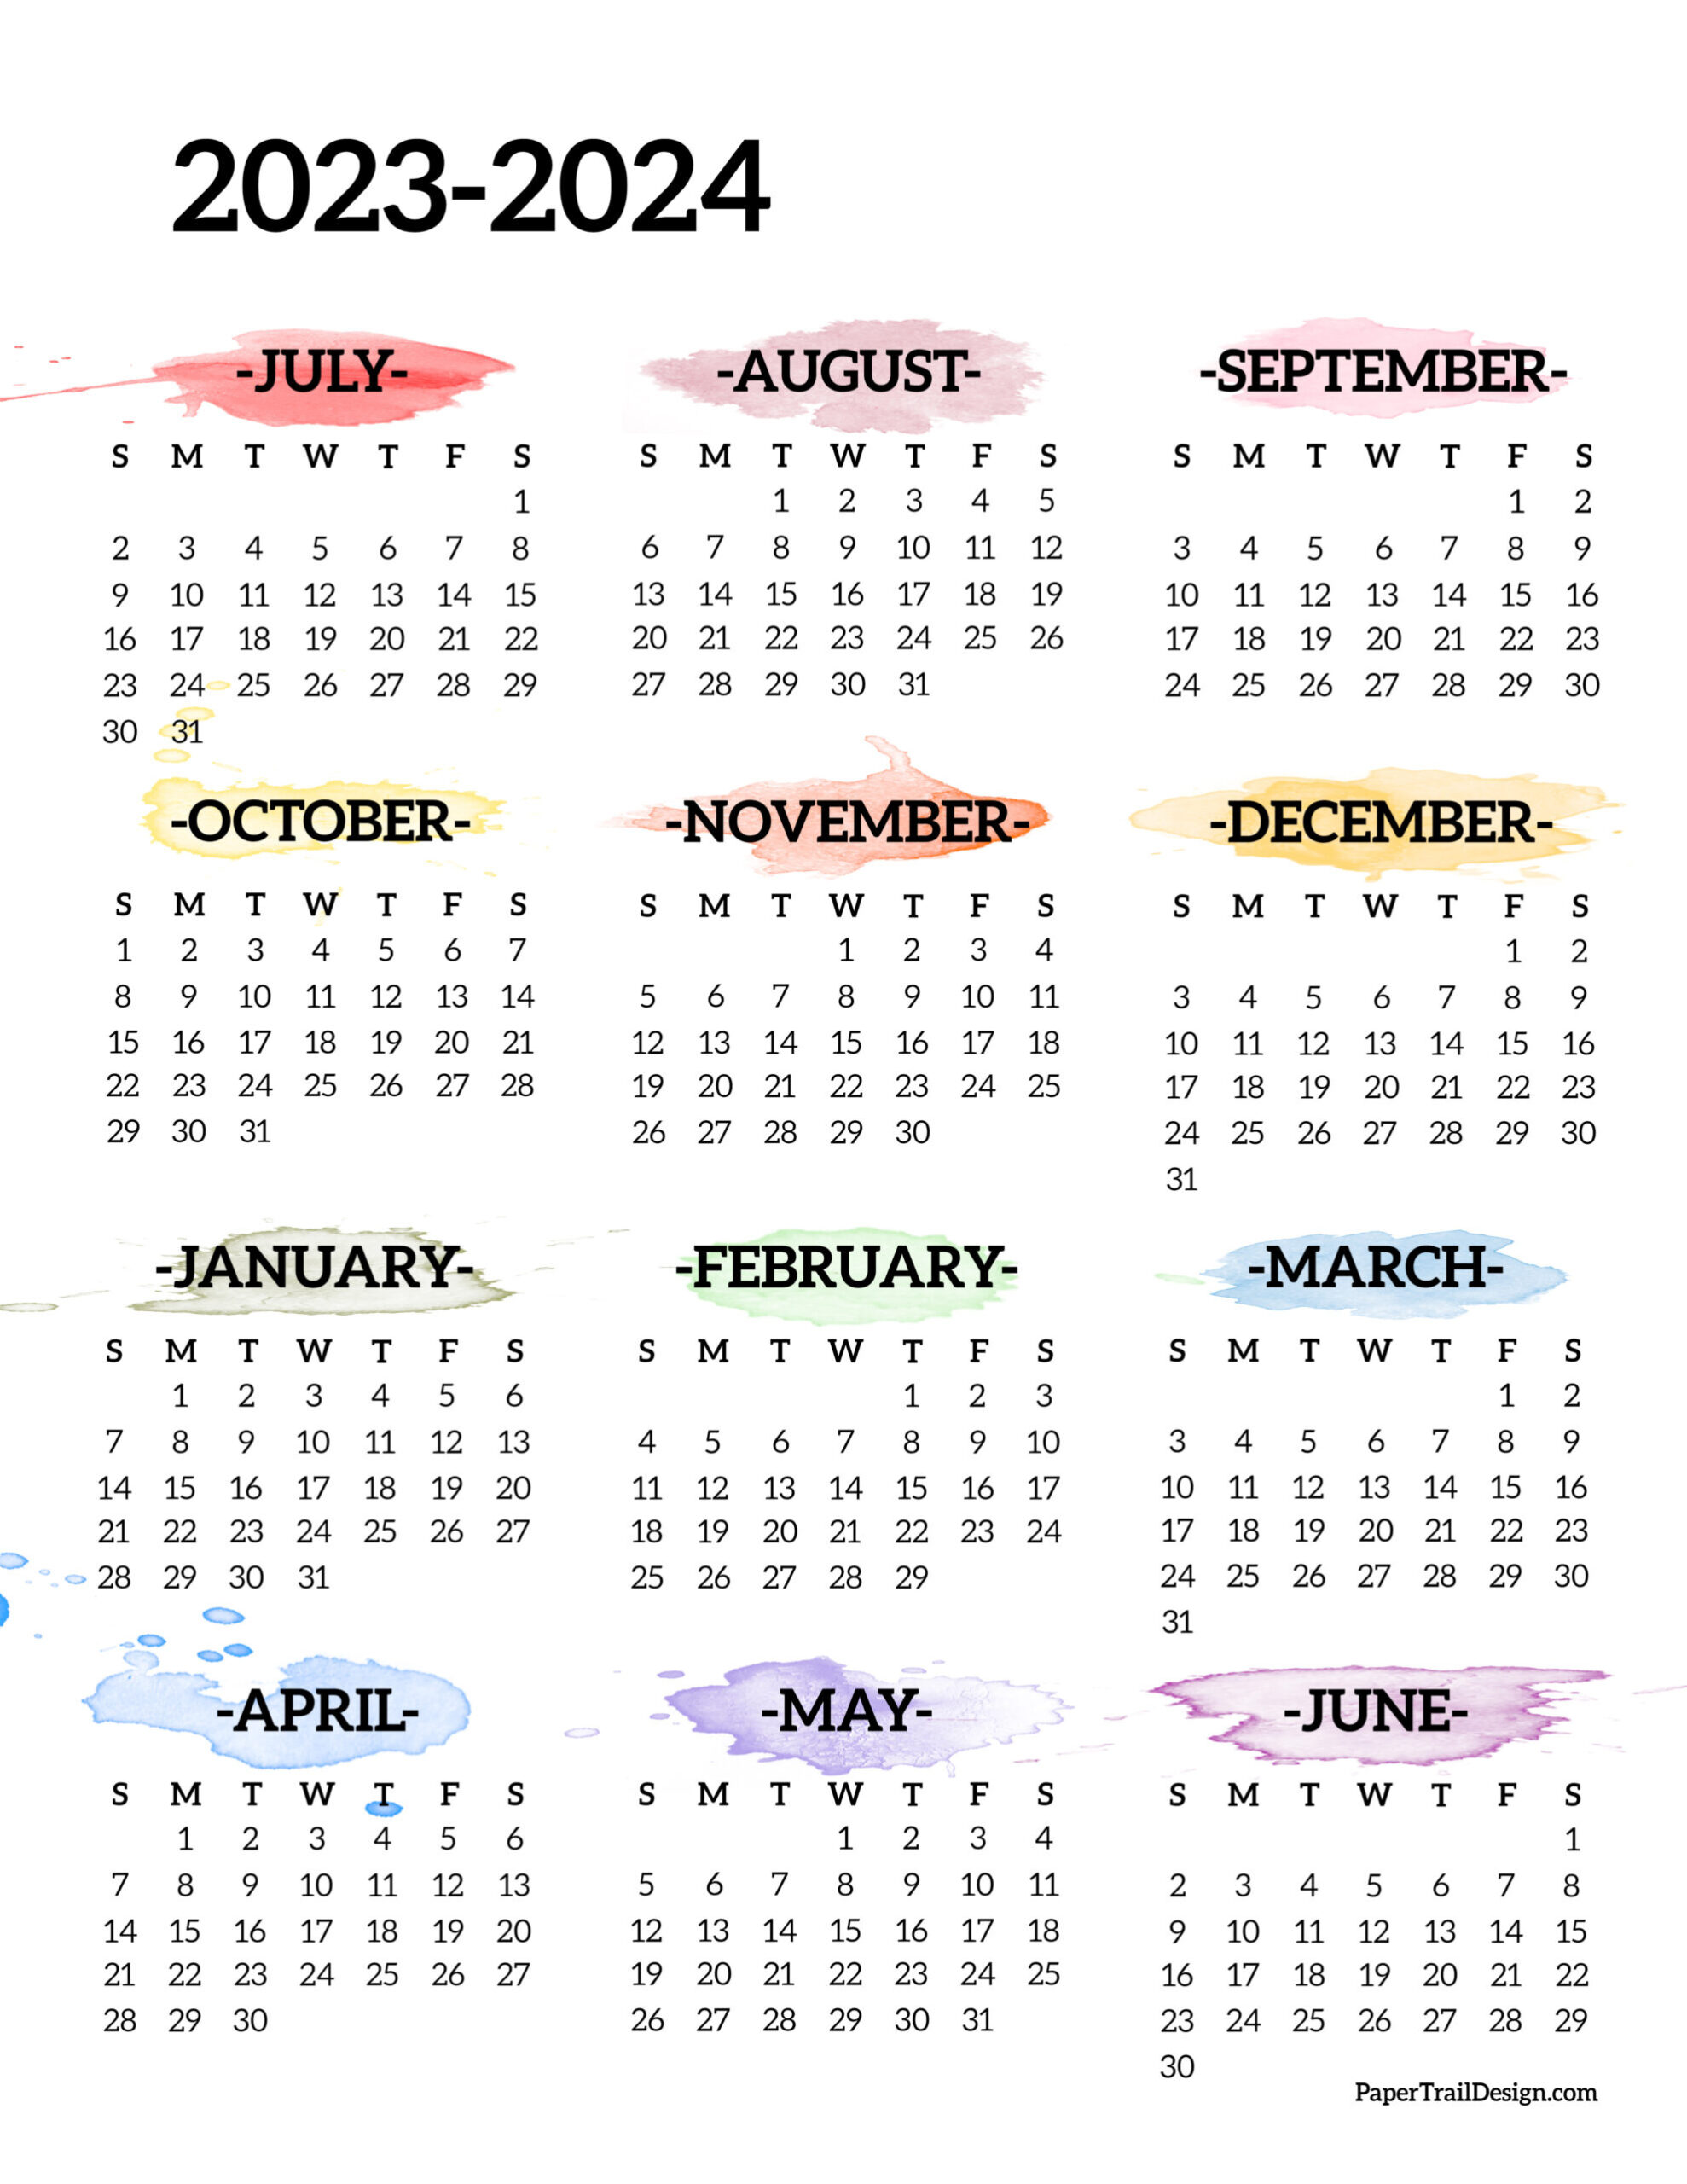 2023-2024 School Year Calendar Free Printable - Paper Trail Design for Calendar June 2023 - May 2024